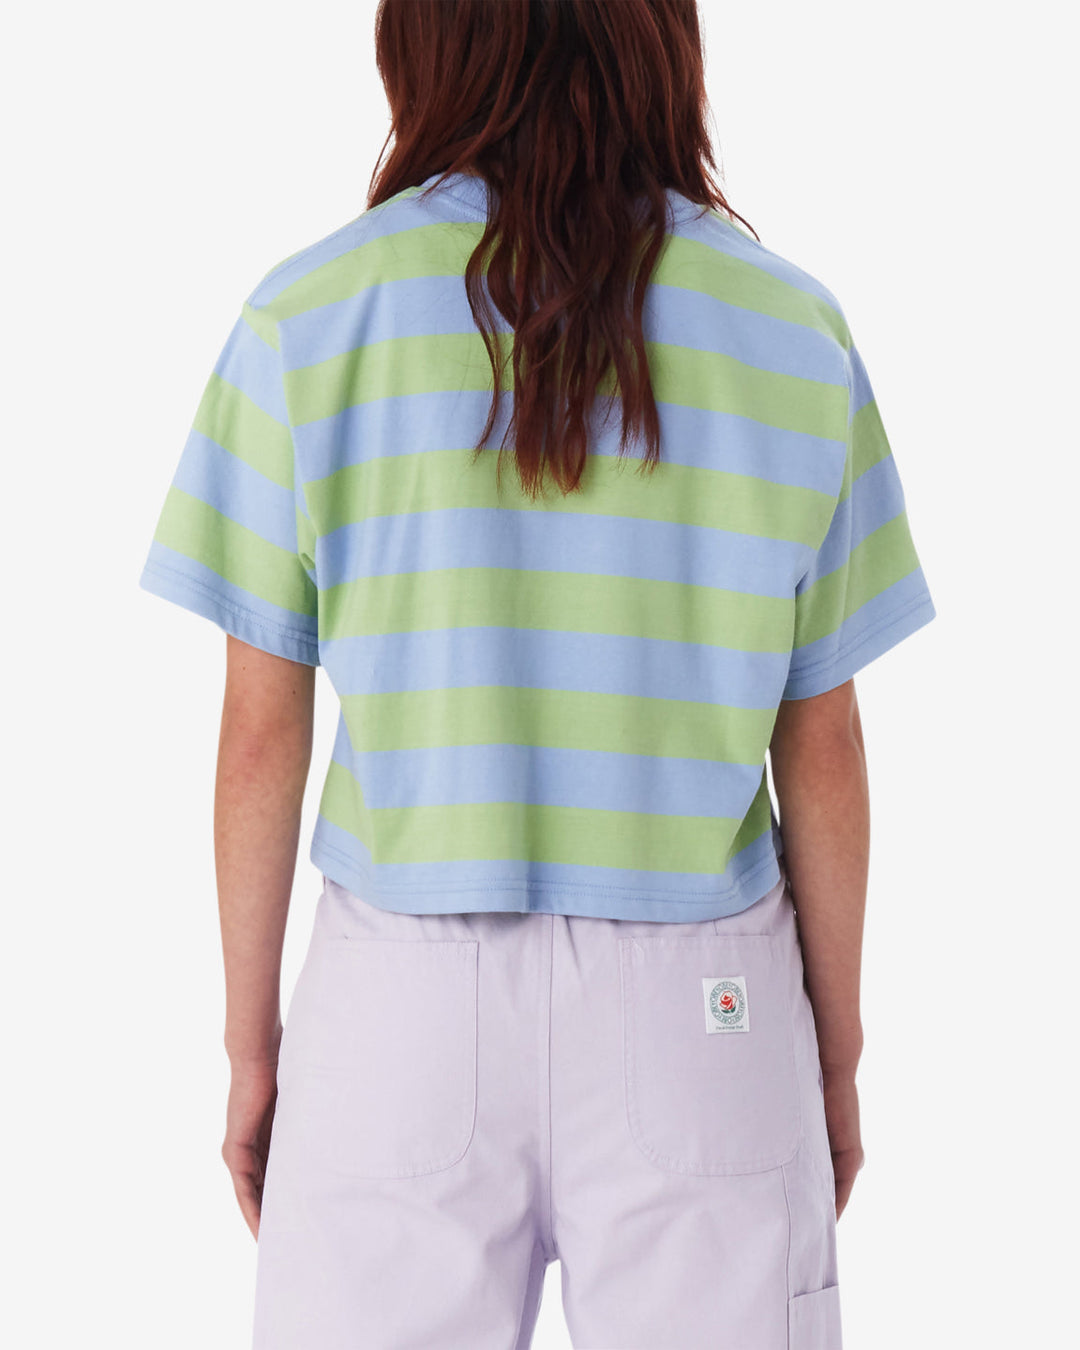 Obey Adams Stripe Cropped T-Shirt - HYDRANGEA MULTI - Sun Diego Boardshop